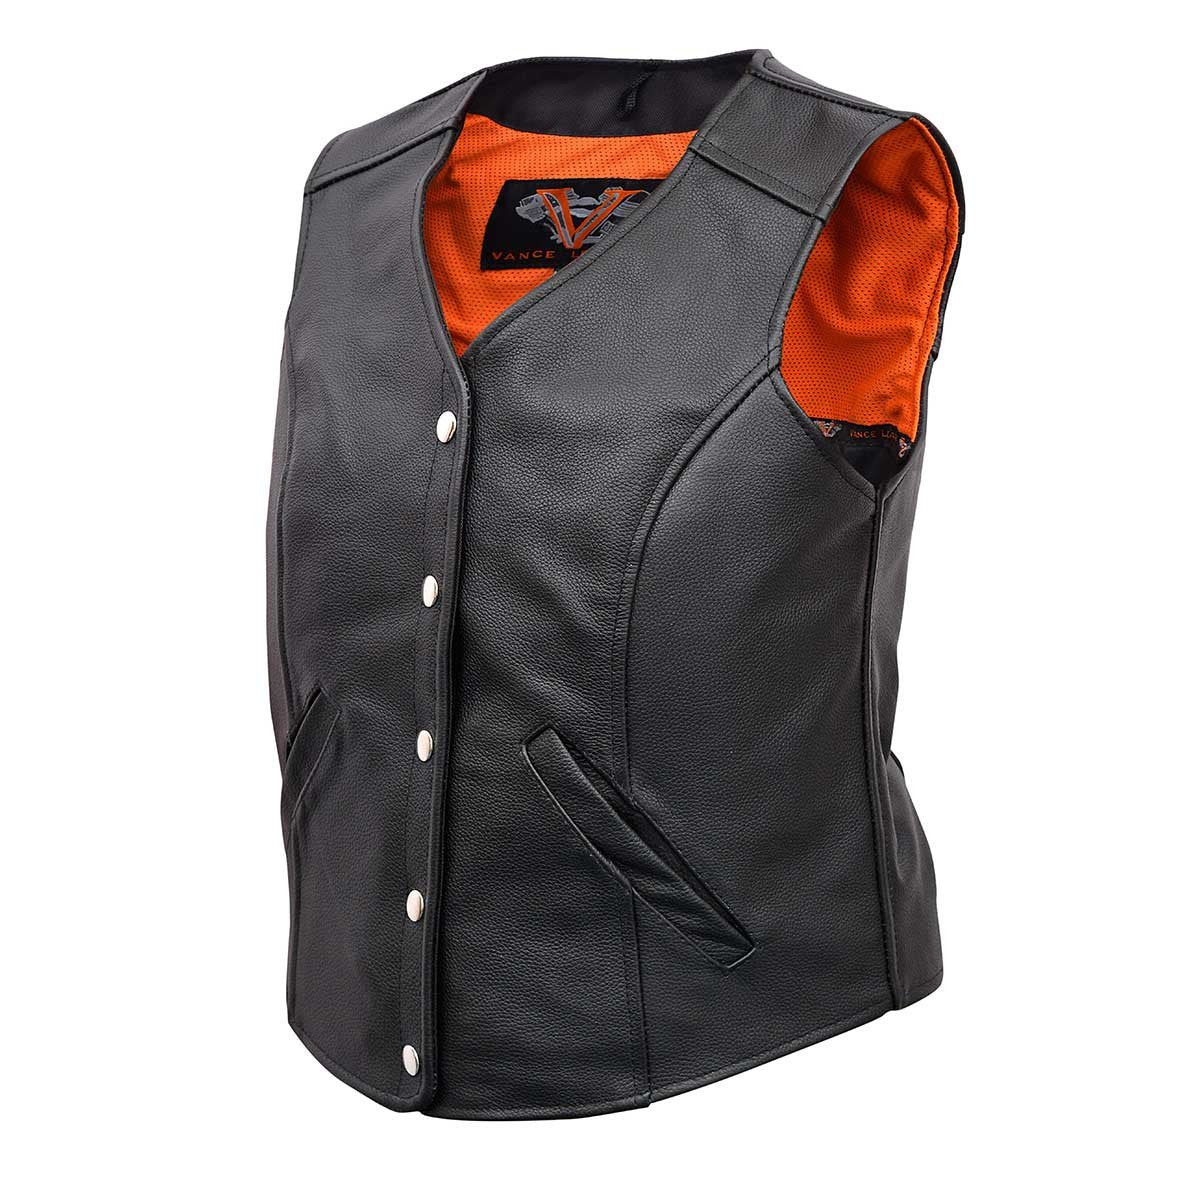 Vance Leather VL1047 Ladies Five Snap Premium Leather Vest from Vance Leather